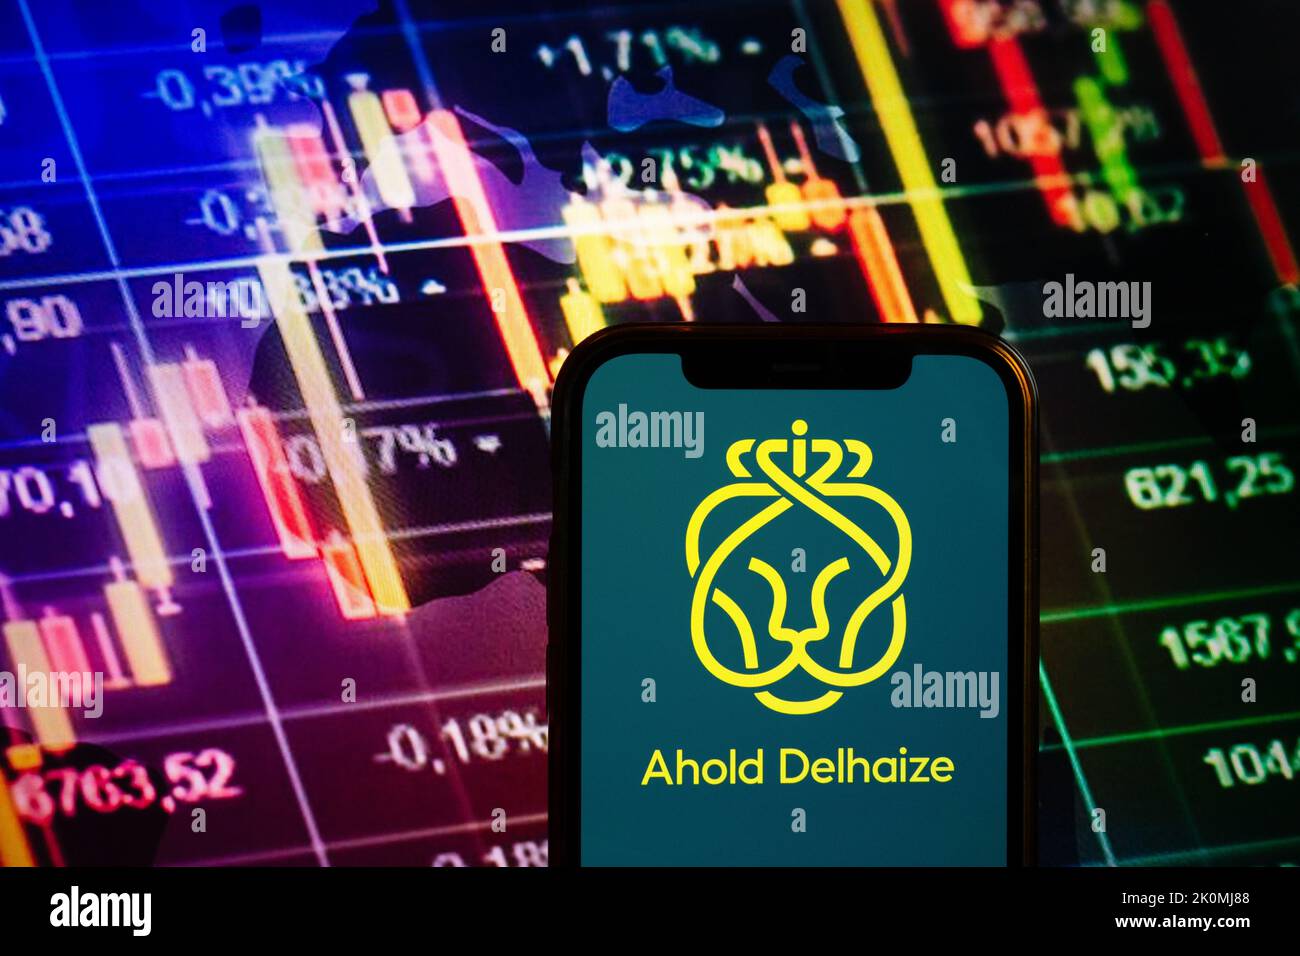 KONSKIE, POLAND - September 10, 2022: Smartphone displaying logo of Ahold Delhaize company on stock exchange diagram background Stock Photo